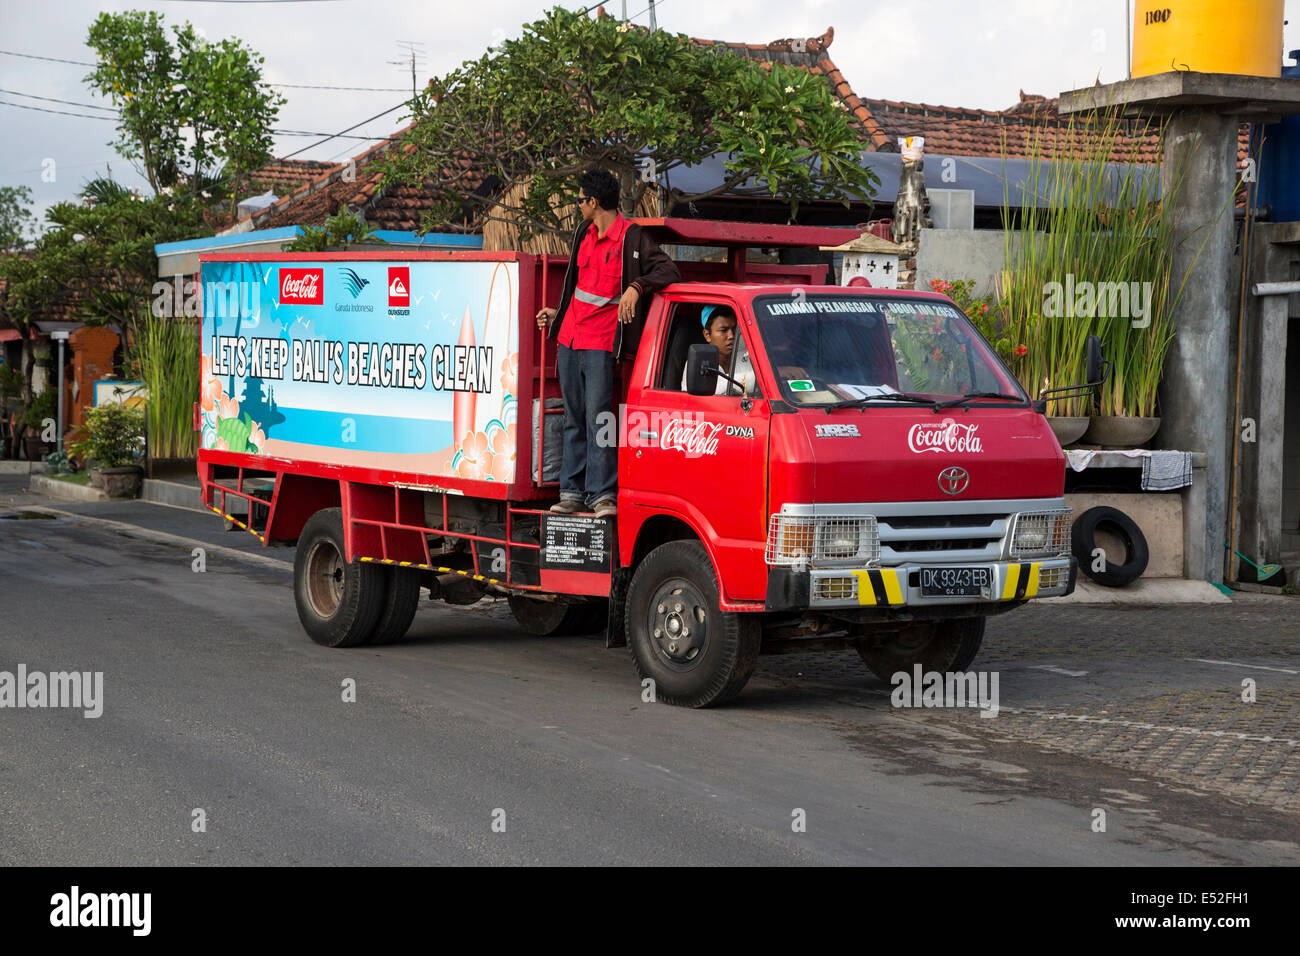 Bali, Indonesia. Pubblica campagna di pulizia: Mantenere di Bali spiagge pulite. Foto Stock